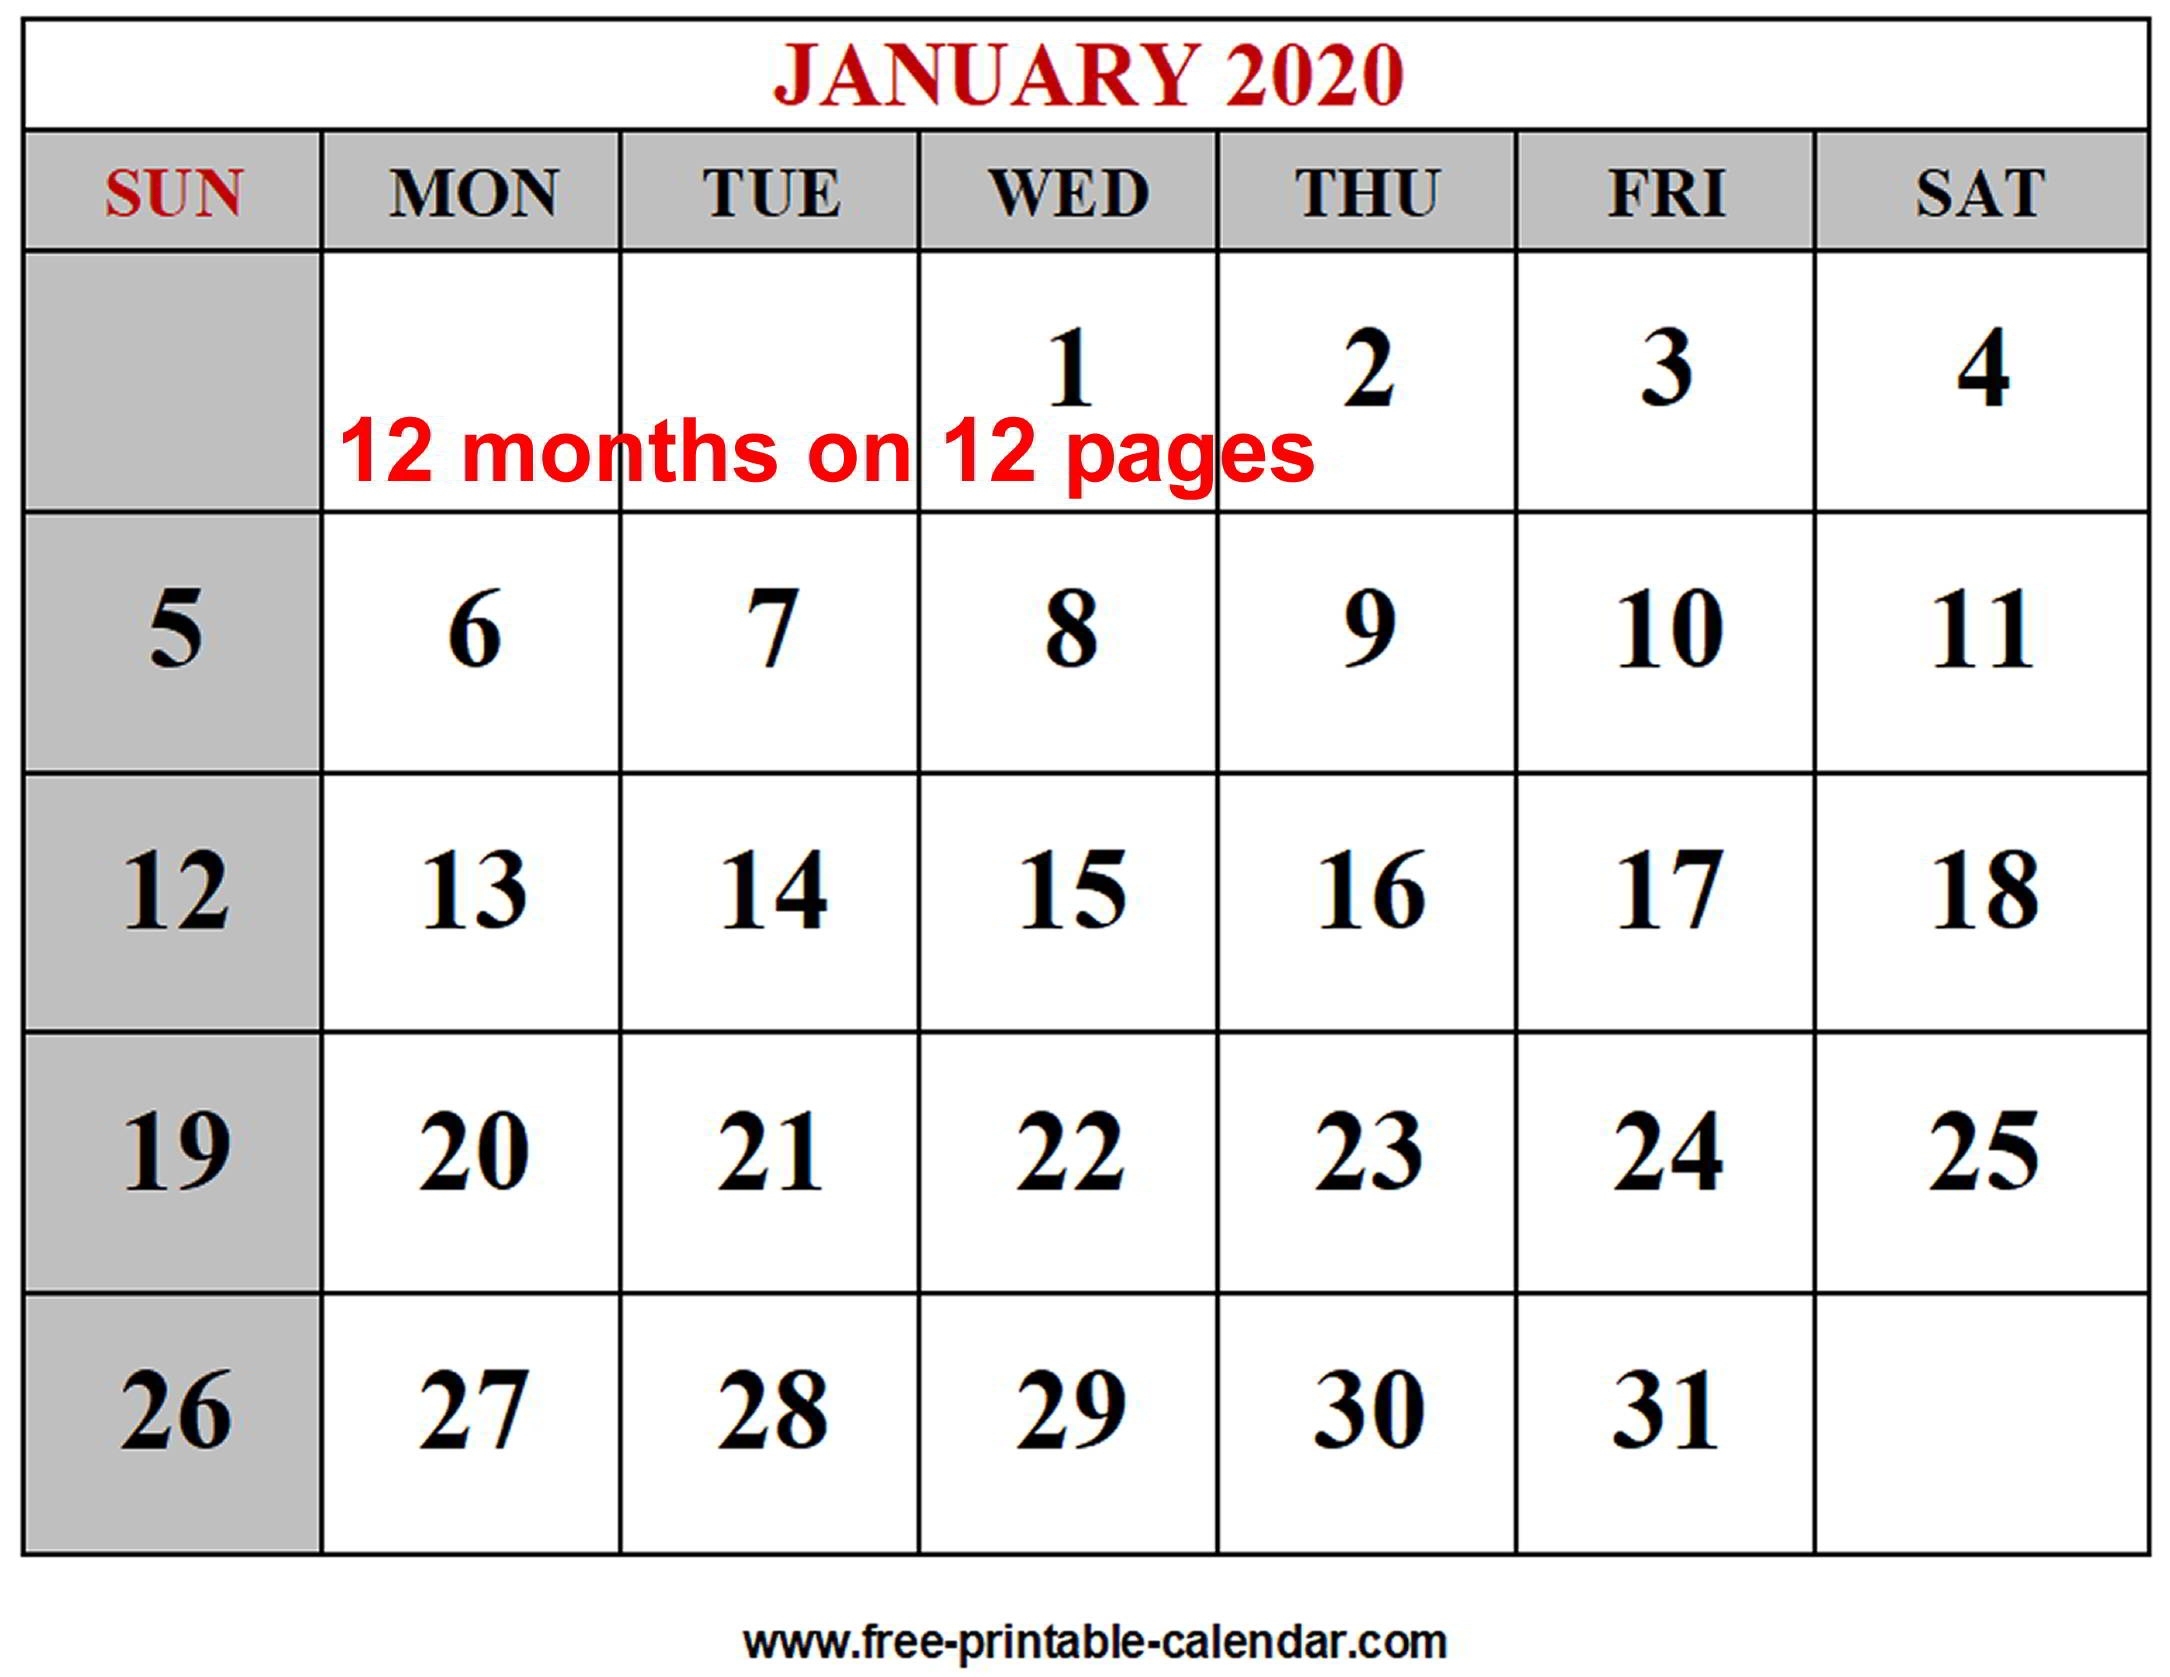 Year 2020 Calendar Templates - Free-Printable-Calendar Free Printable Calendar Templates Uk